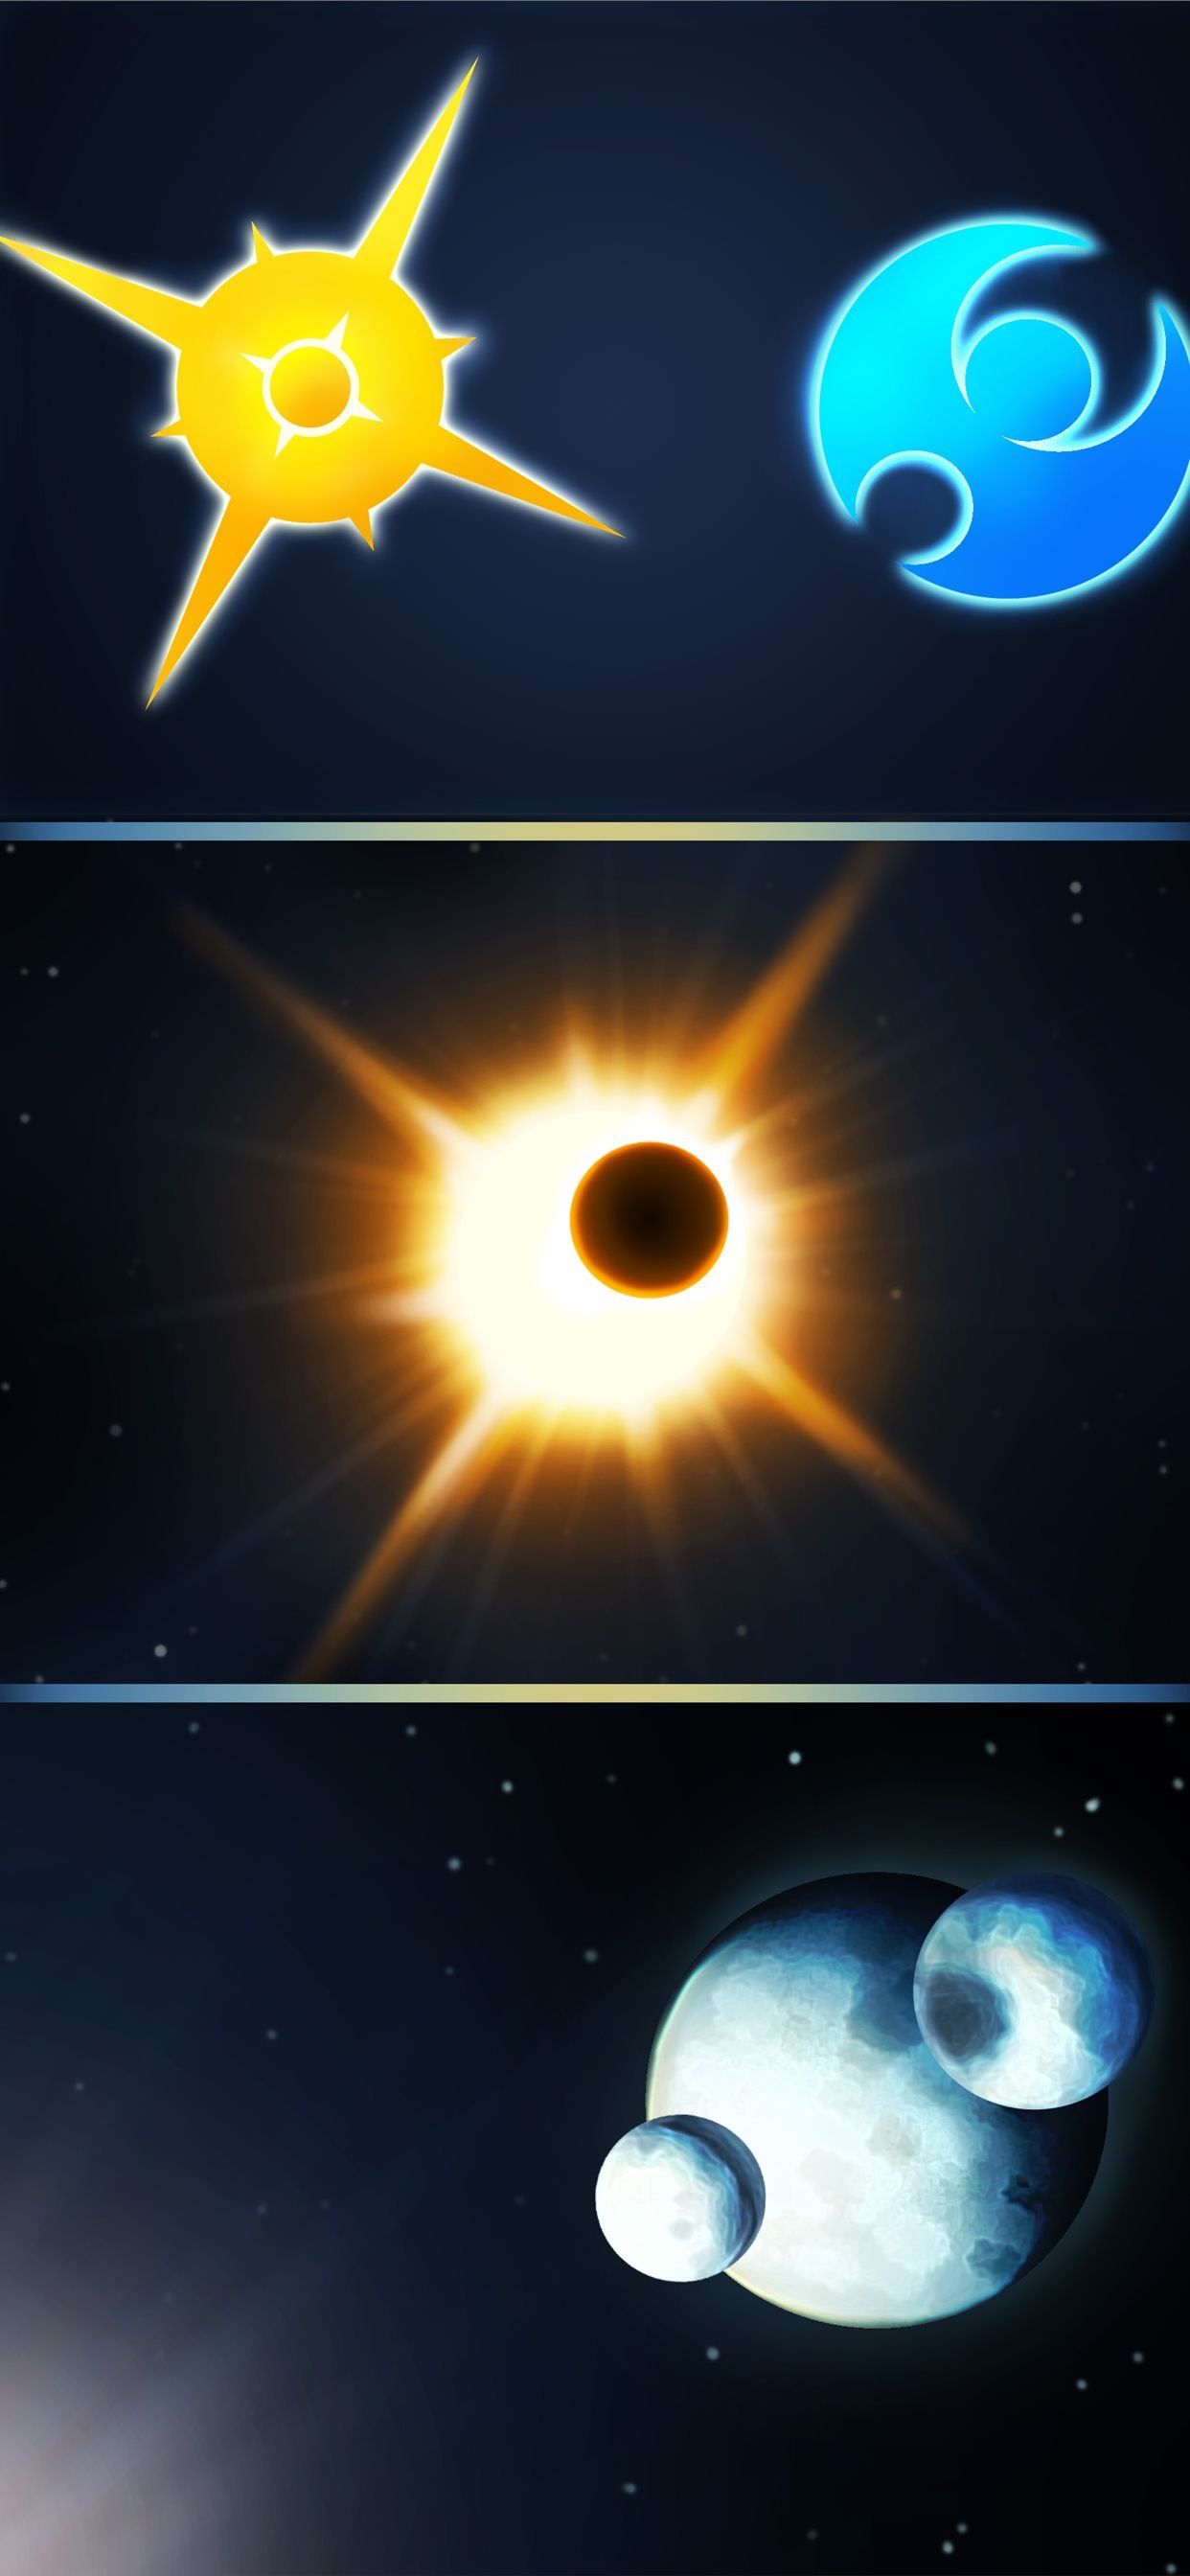 Pokemon Sun and Moon on afari iPhone X Wallpaper Free Download